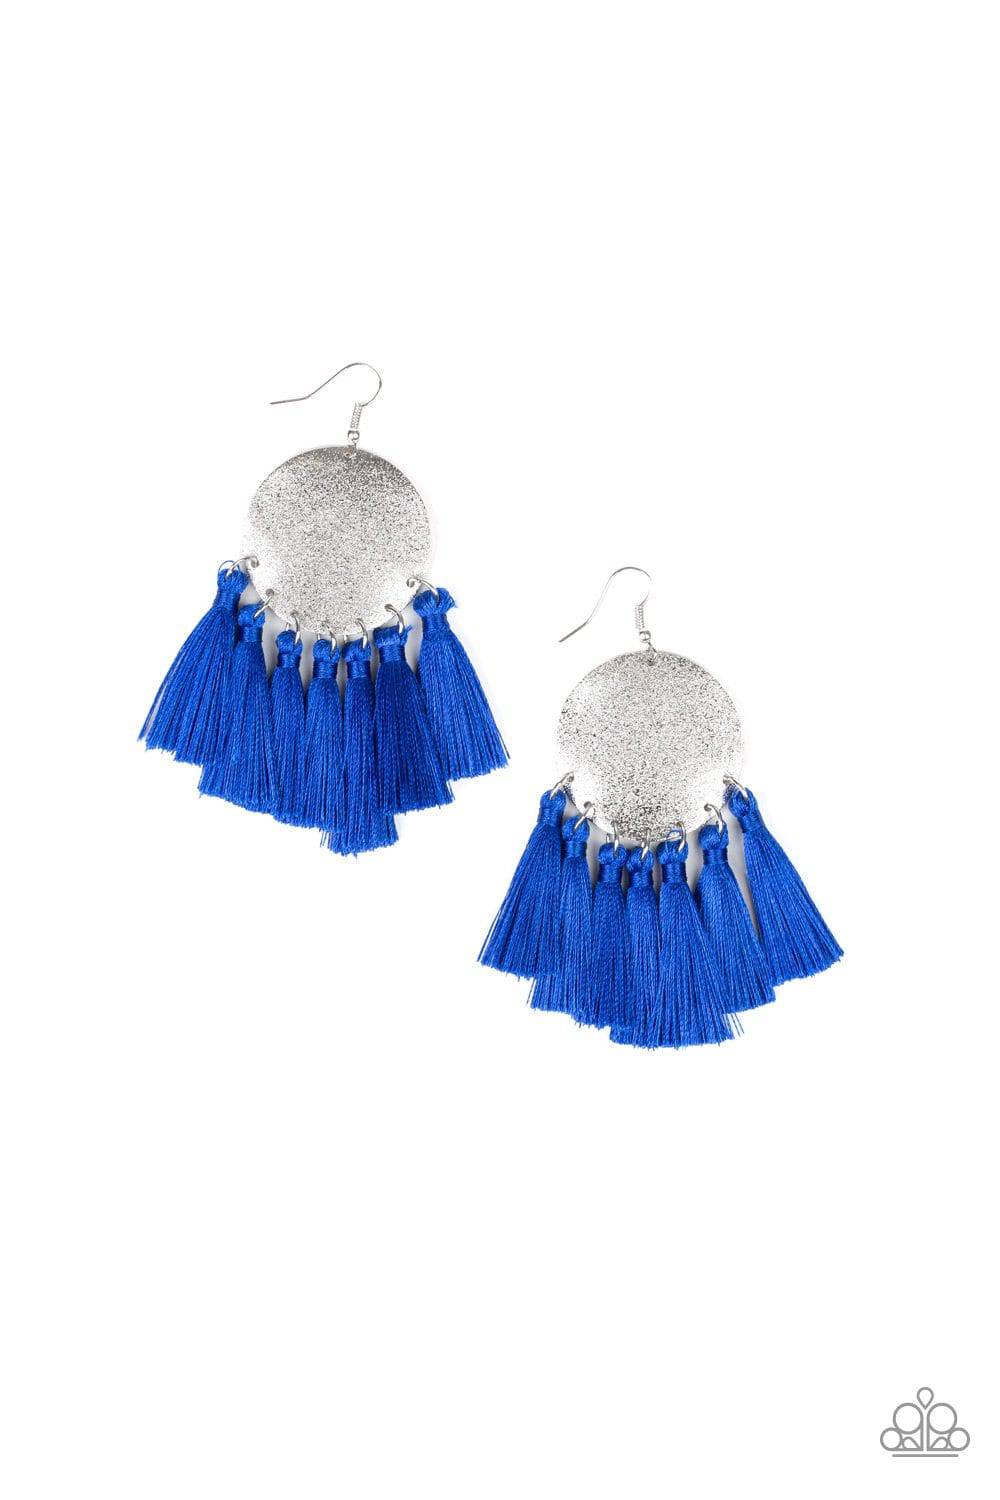 Tassel Tribute - Blue Earrings - Paparazzi Accessories - GlaMarous Titi Jewels